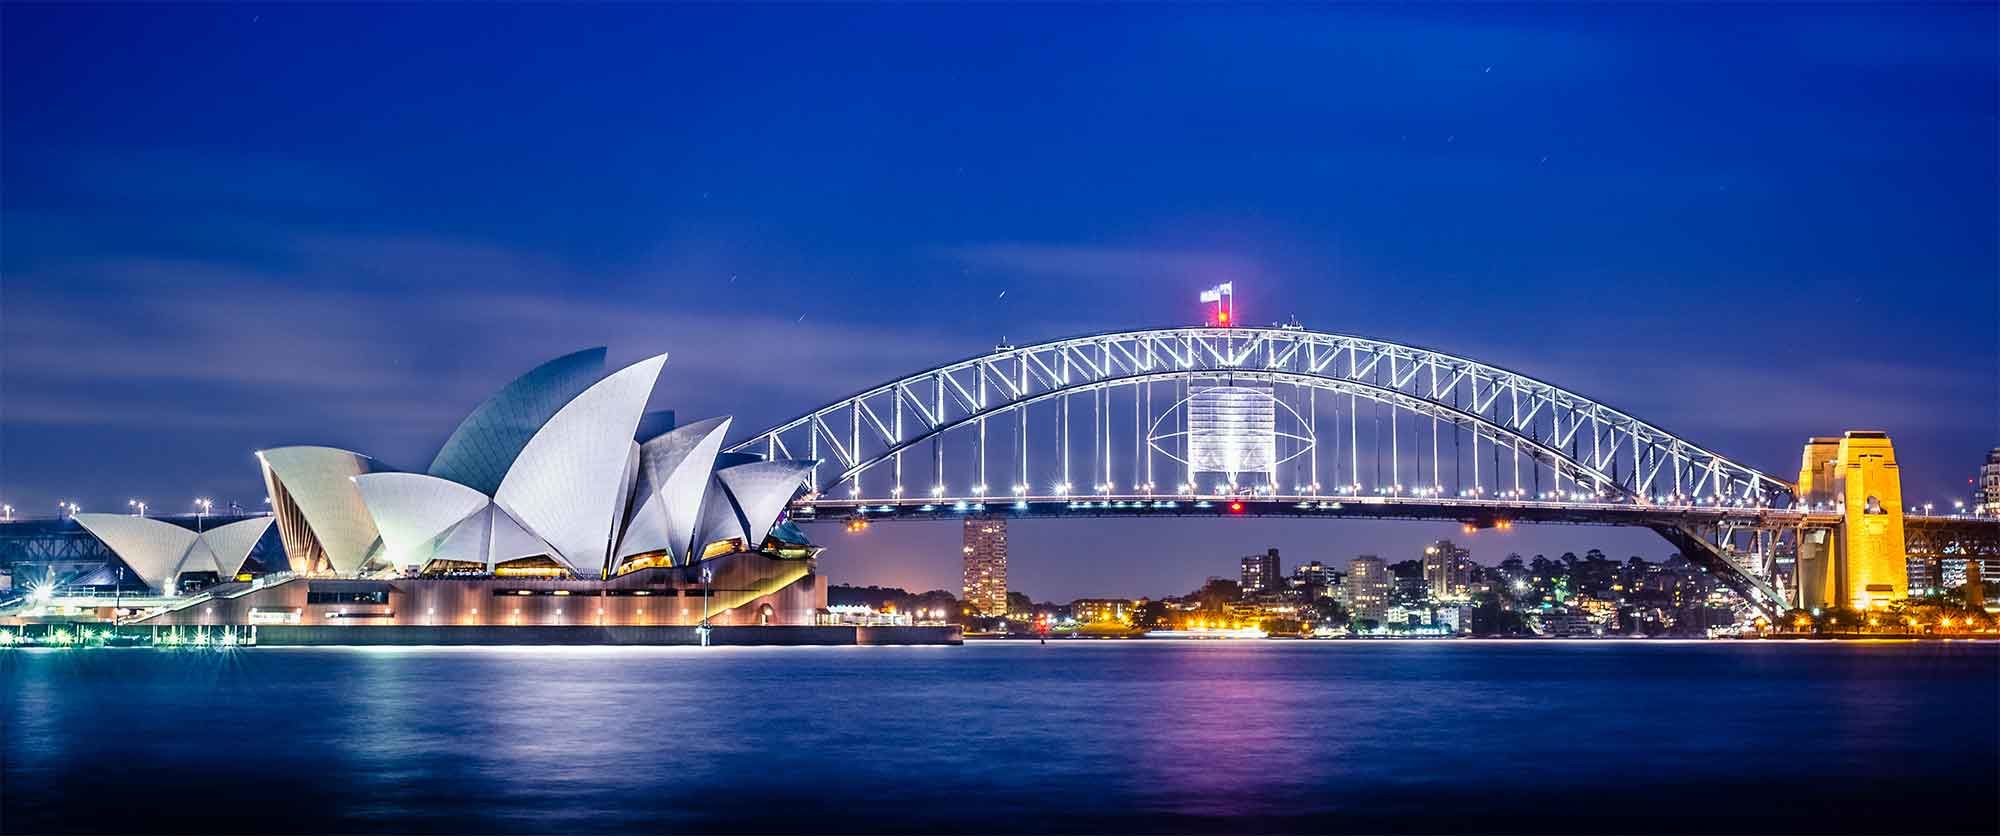 Sydney - Discover Sydney Opera House##Discover Harbour Bridge##Discover Royal Botanic Gardens